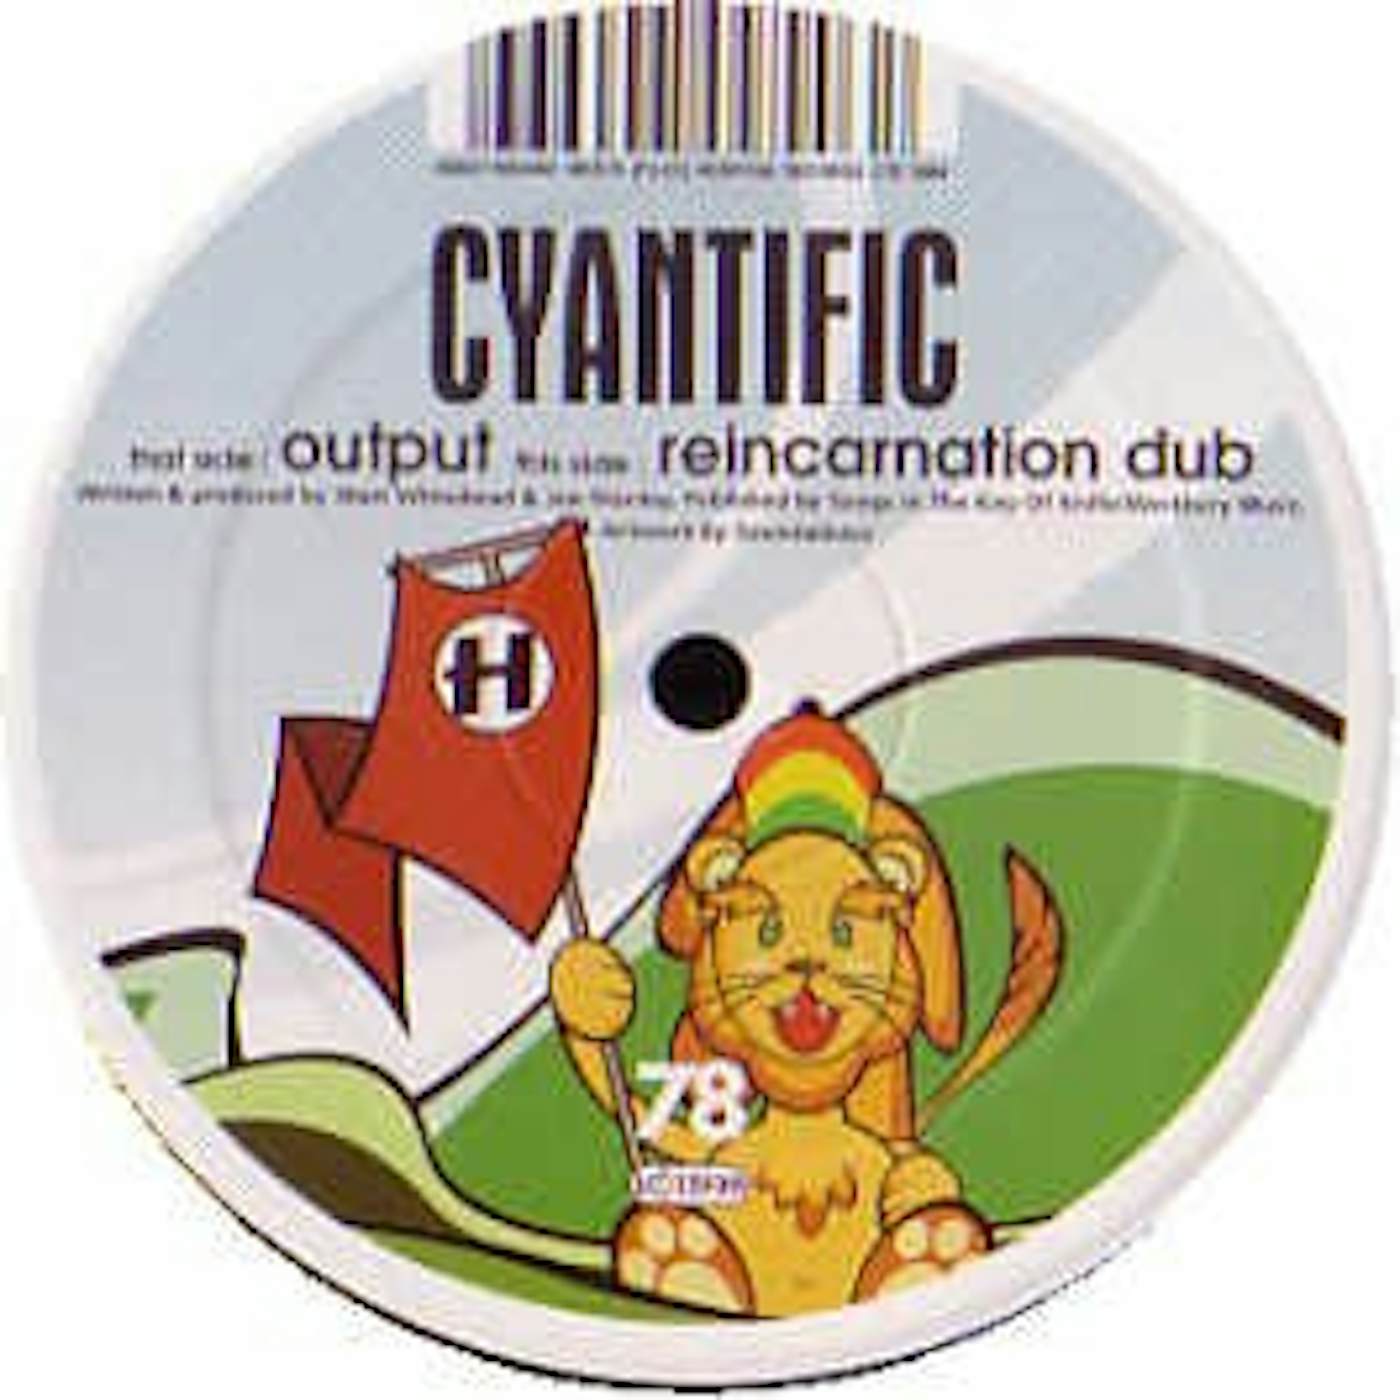 Cyantific Output Vinyl Record